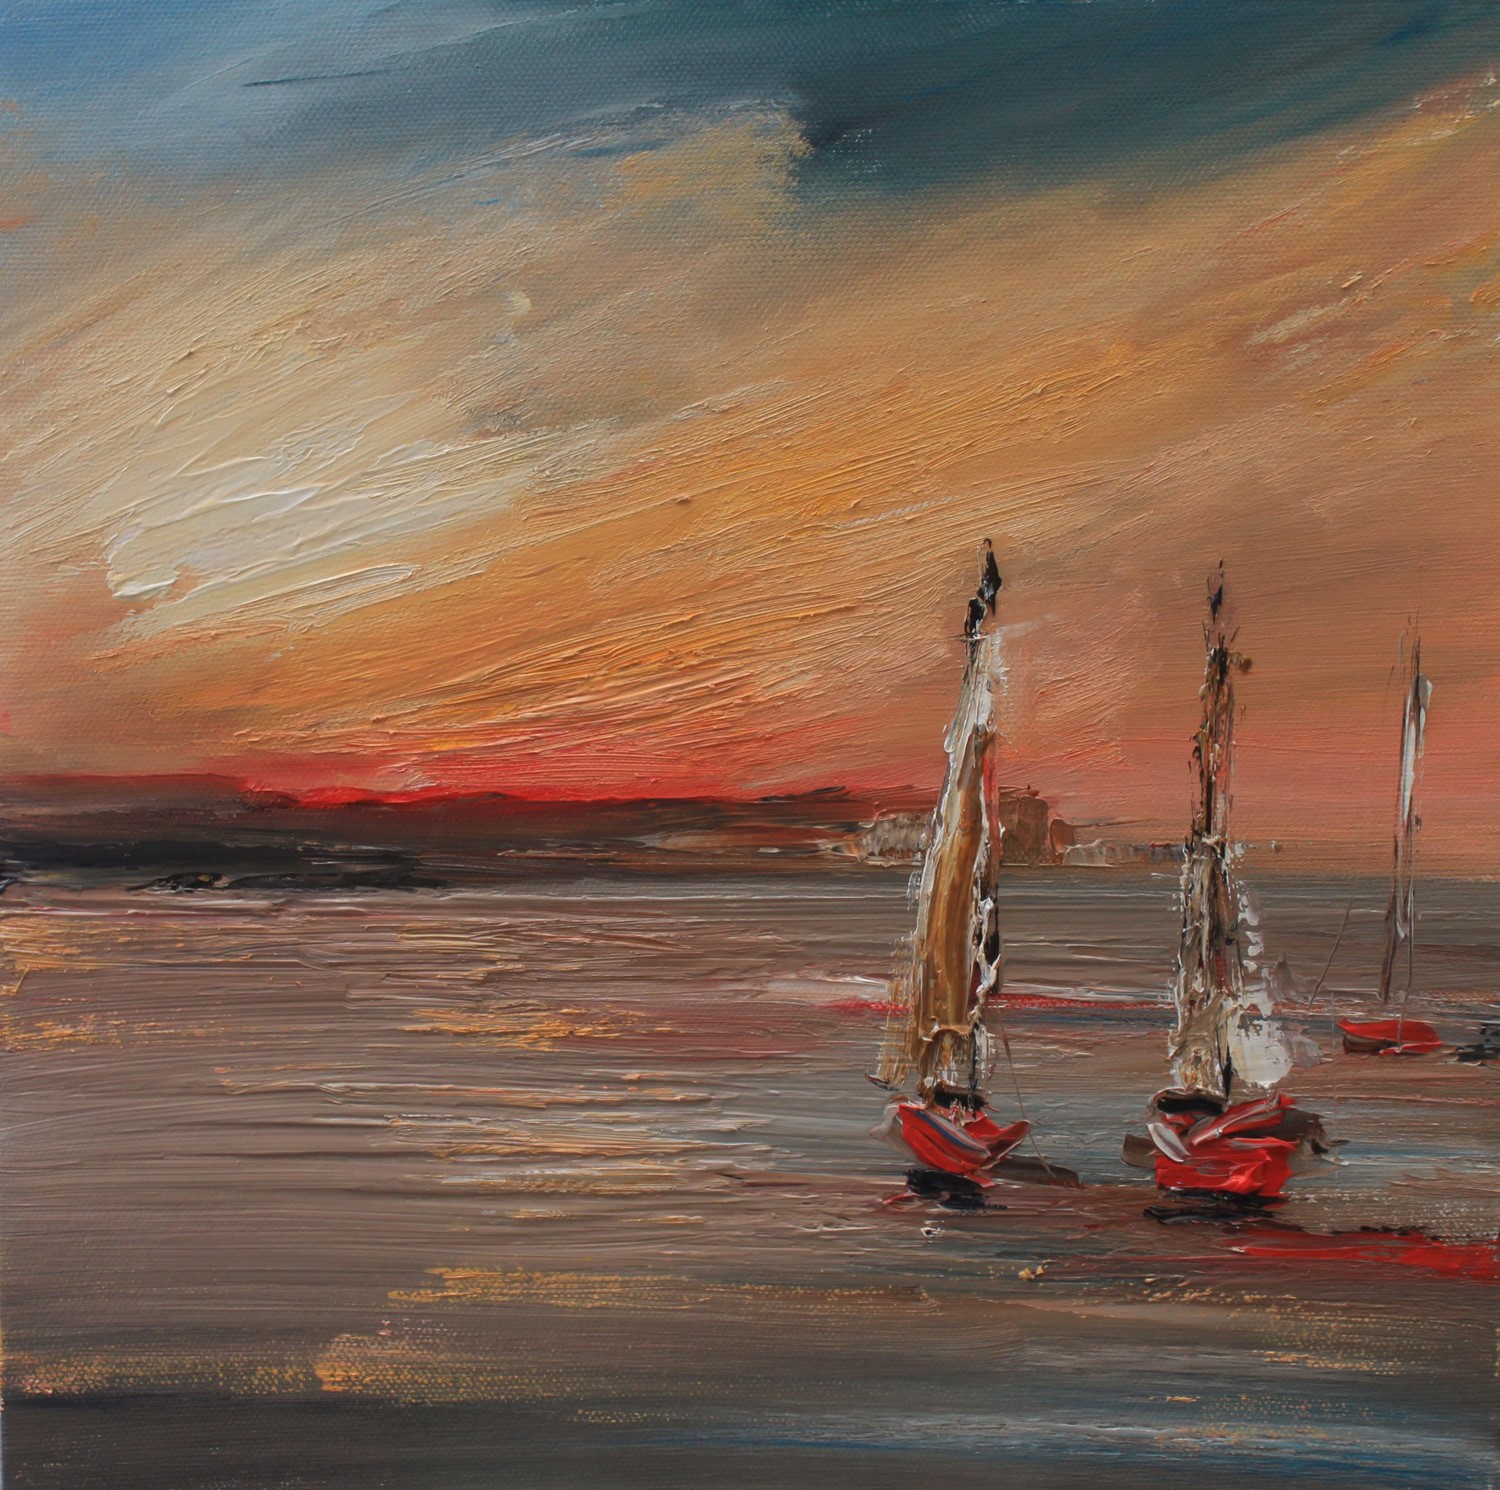 'Sails at Sunset' by artist Rosanne Barr